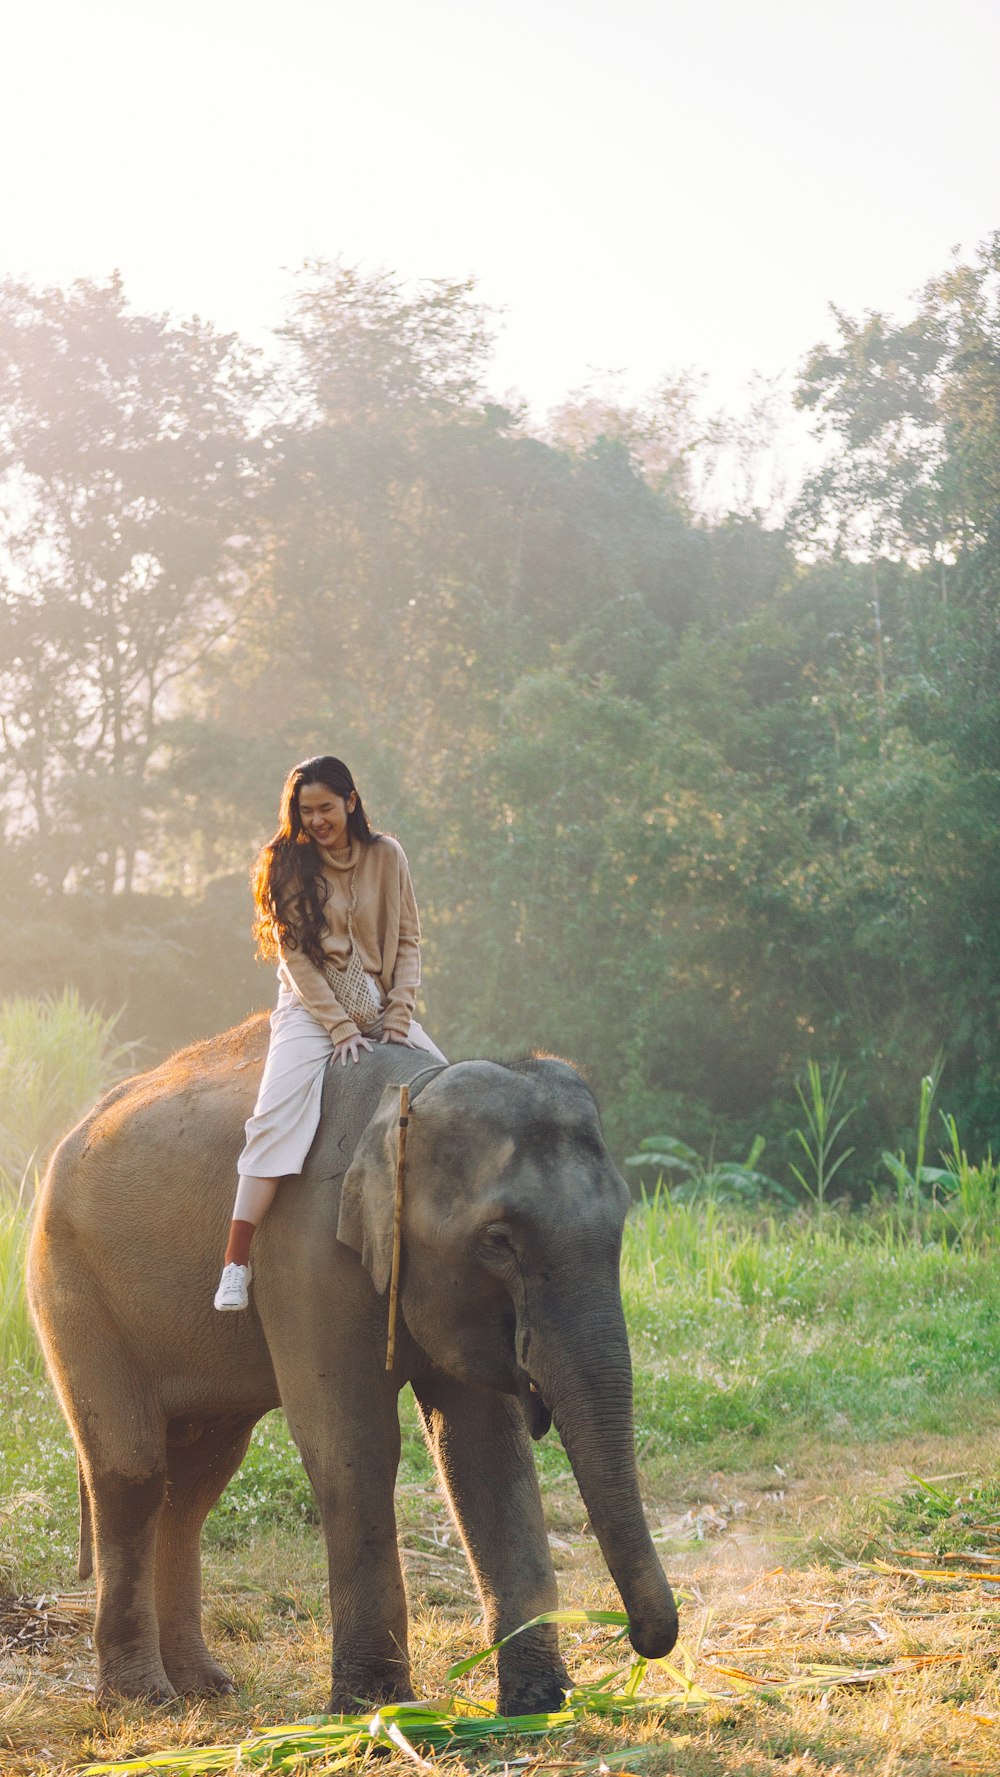 woman riding on black elephant during daytime